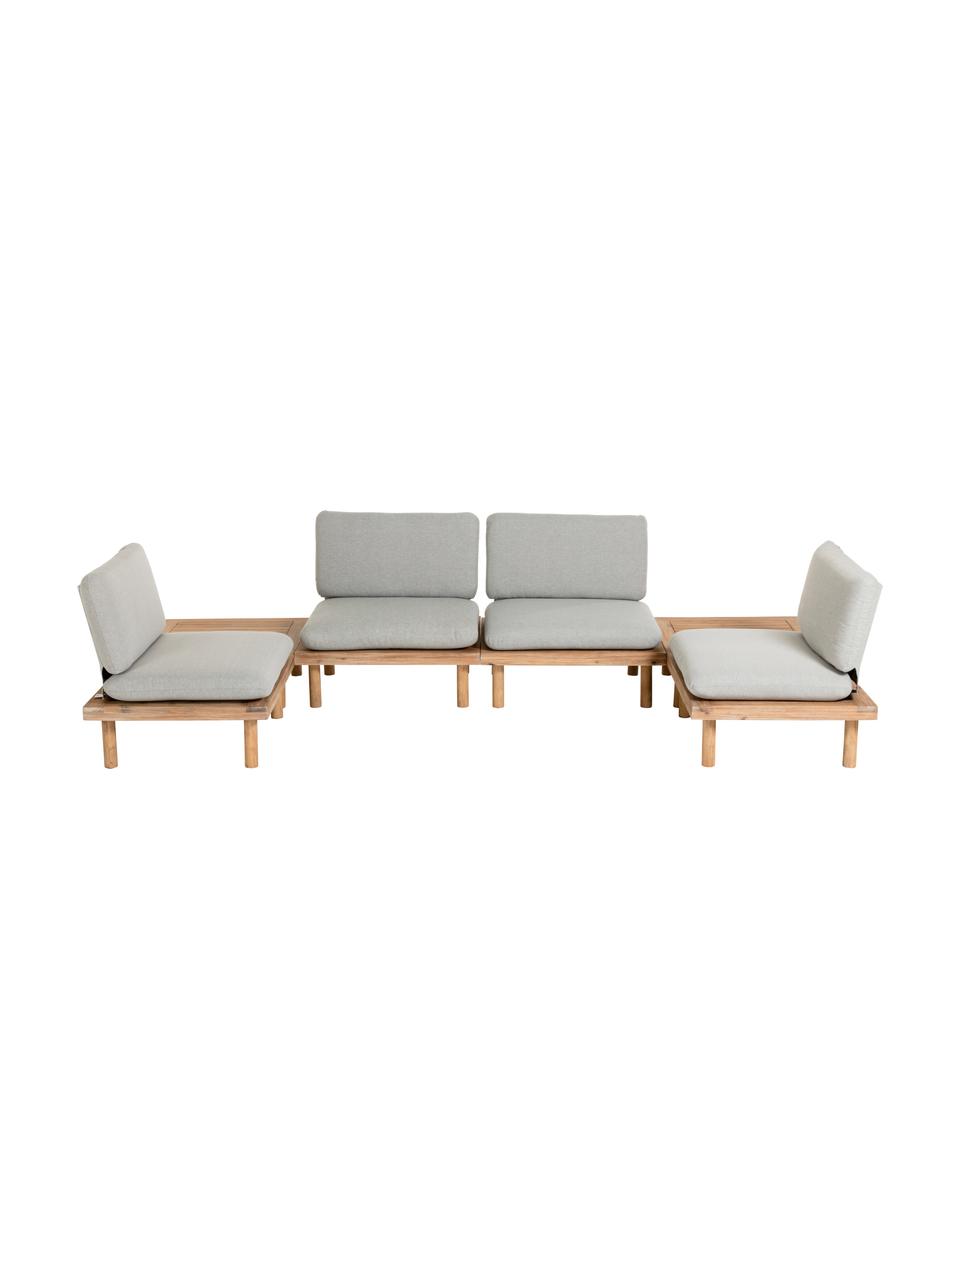 Modulares Holz-Lounge-Set Viridis, 6-tlg., Gestell: Akazienholz, lackiert, Bezug: 100% Polyester, Akazienholz, Grau, Set mit verschiedenen Grössen